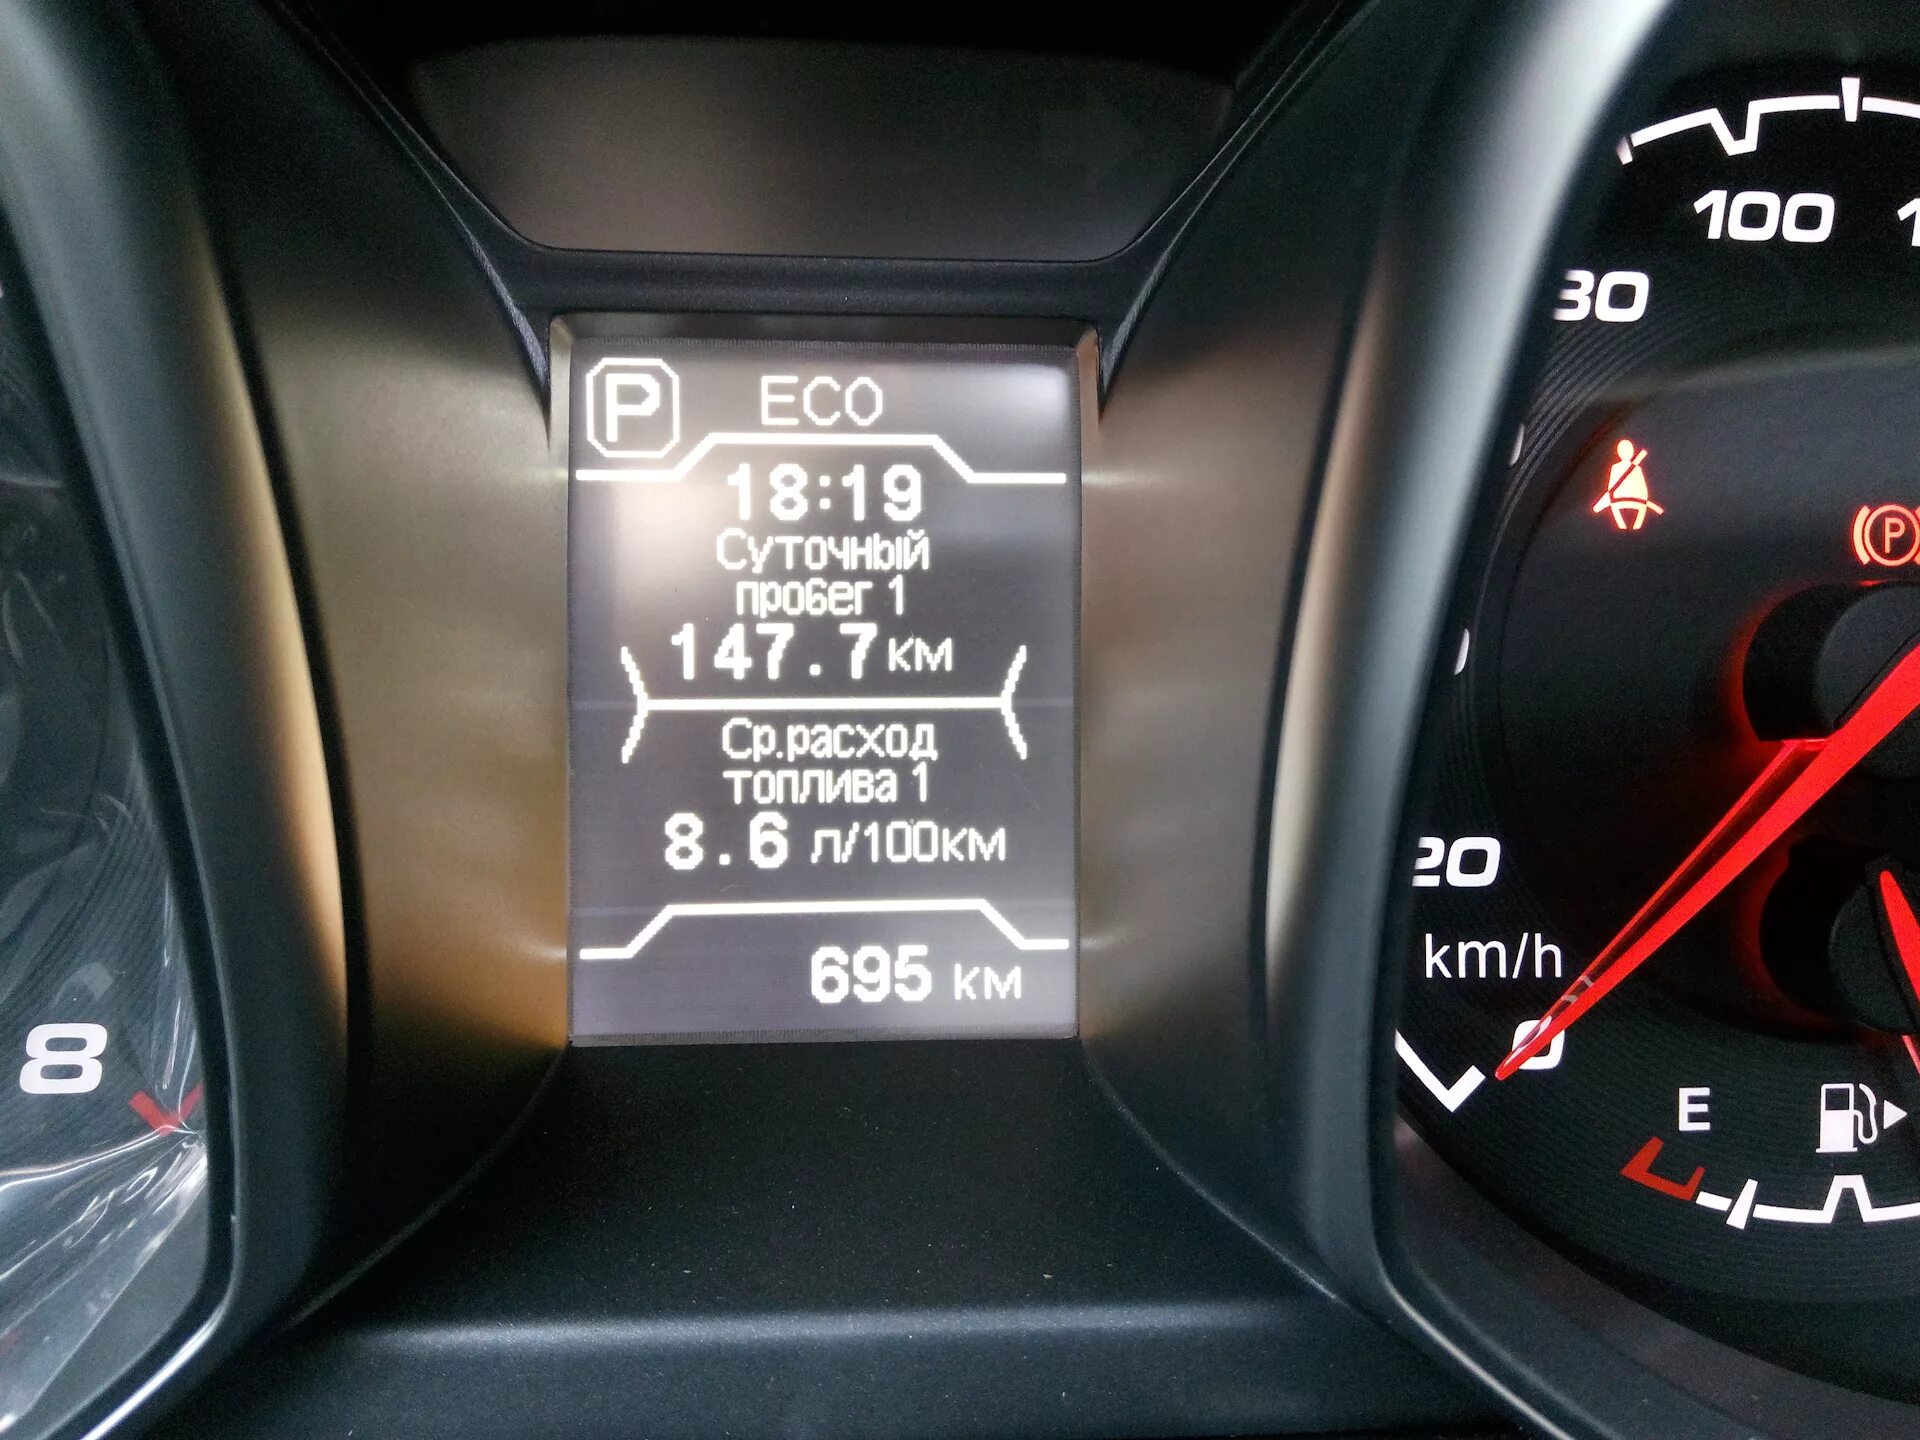 Расход топлива. Чери Тигго 8 про расход топлива. Измерение расхода топлива в автомобиле. Chery Tiggo 8 расходы топлива. Чери тигго 8 расход